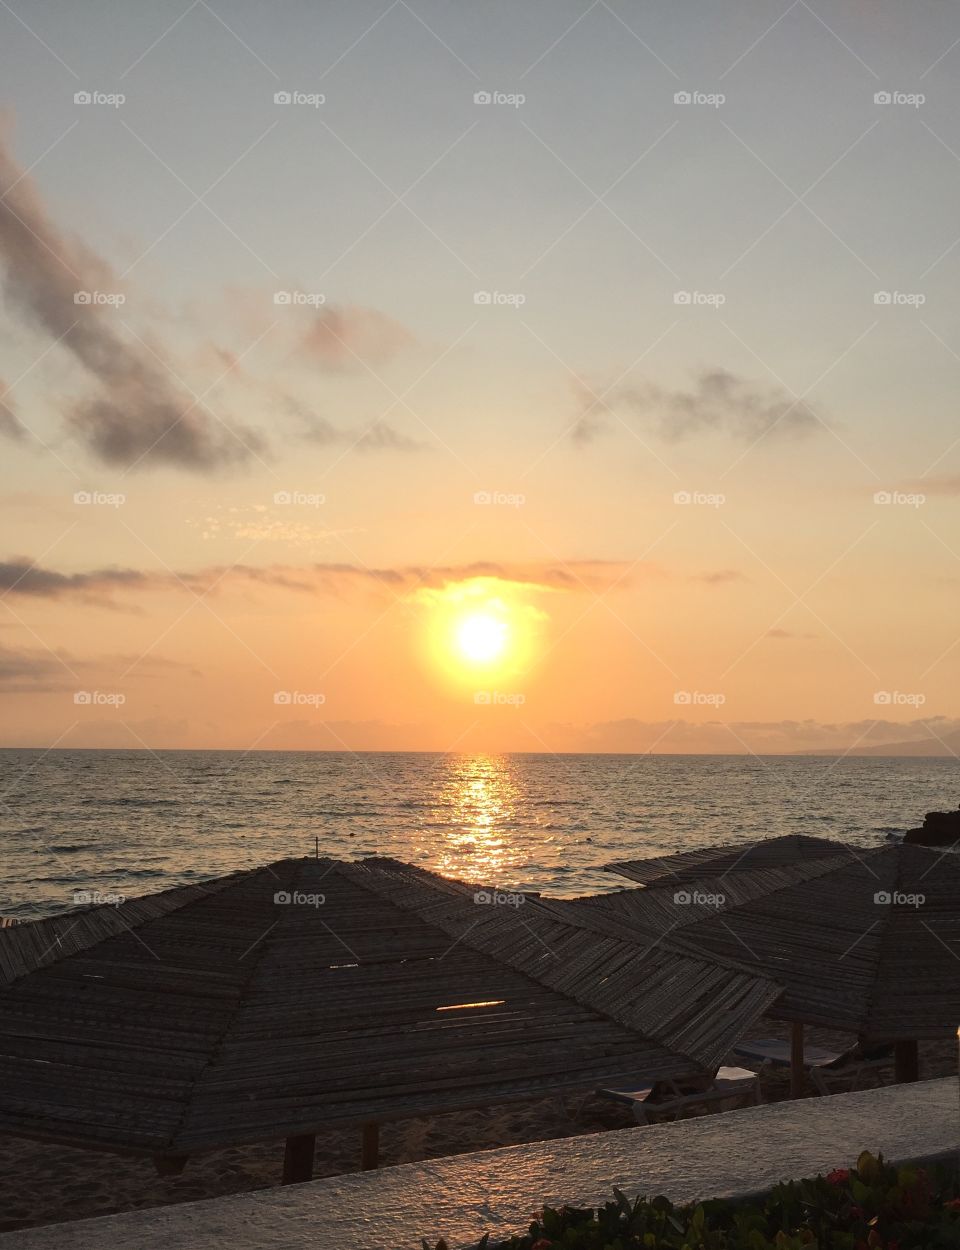 Sunset over the seashore of Cozumel